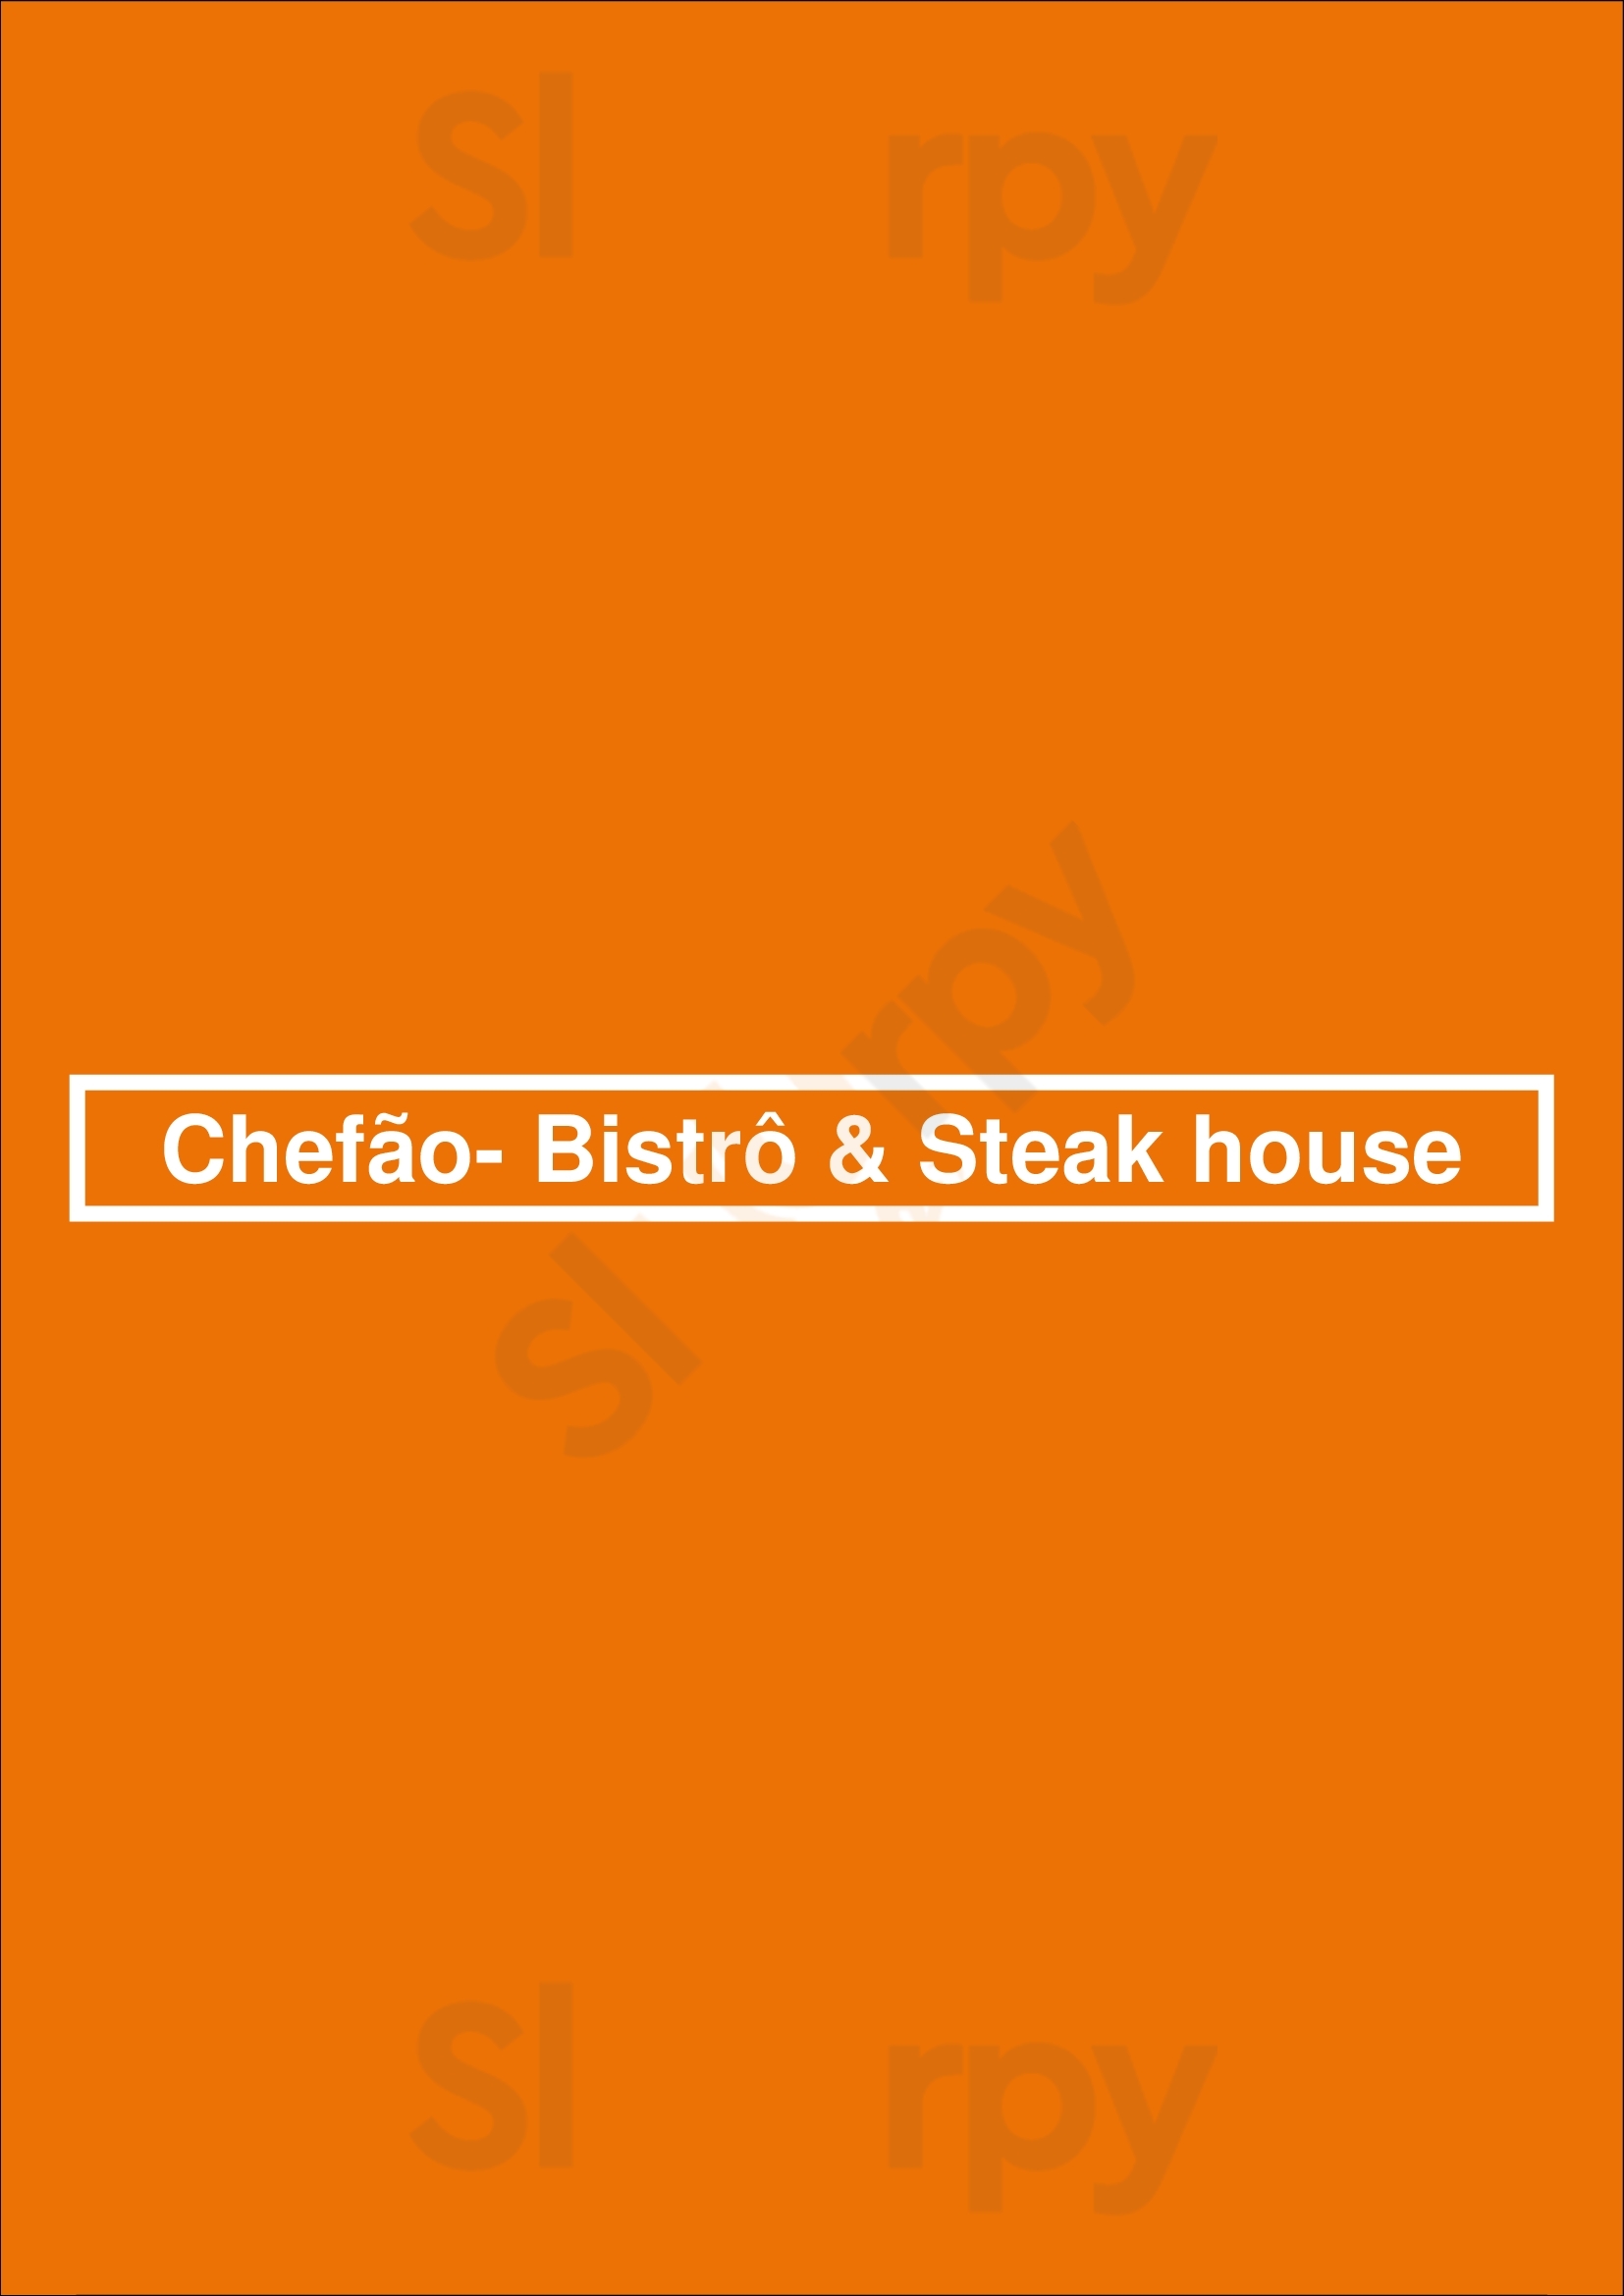 Chefão- Bistrô & Steak House Braga Menu - 1